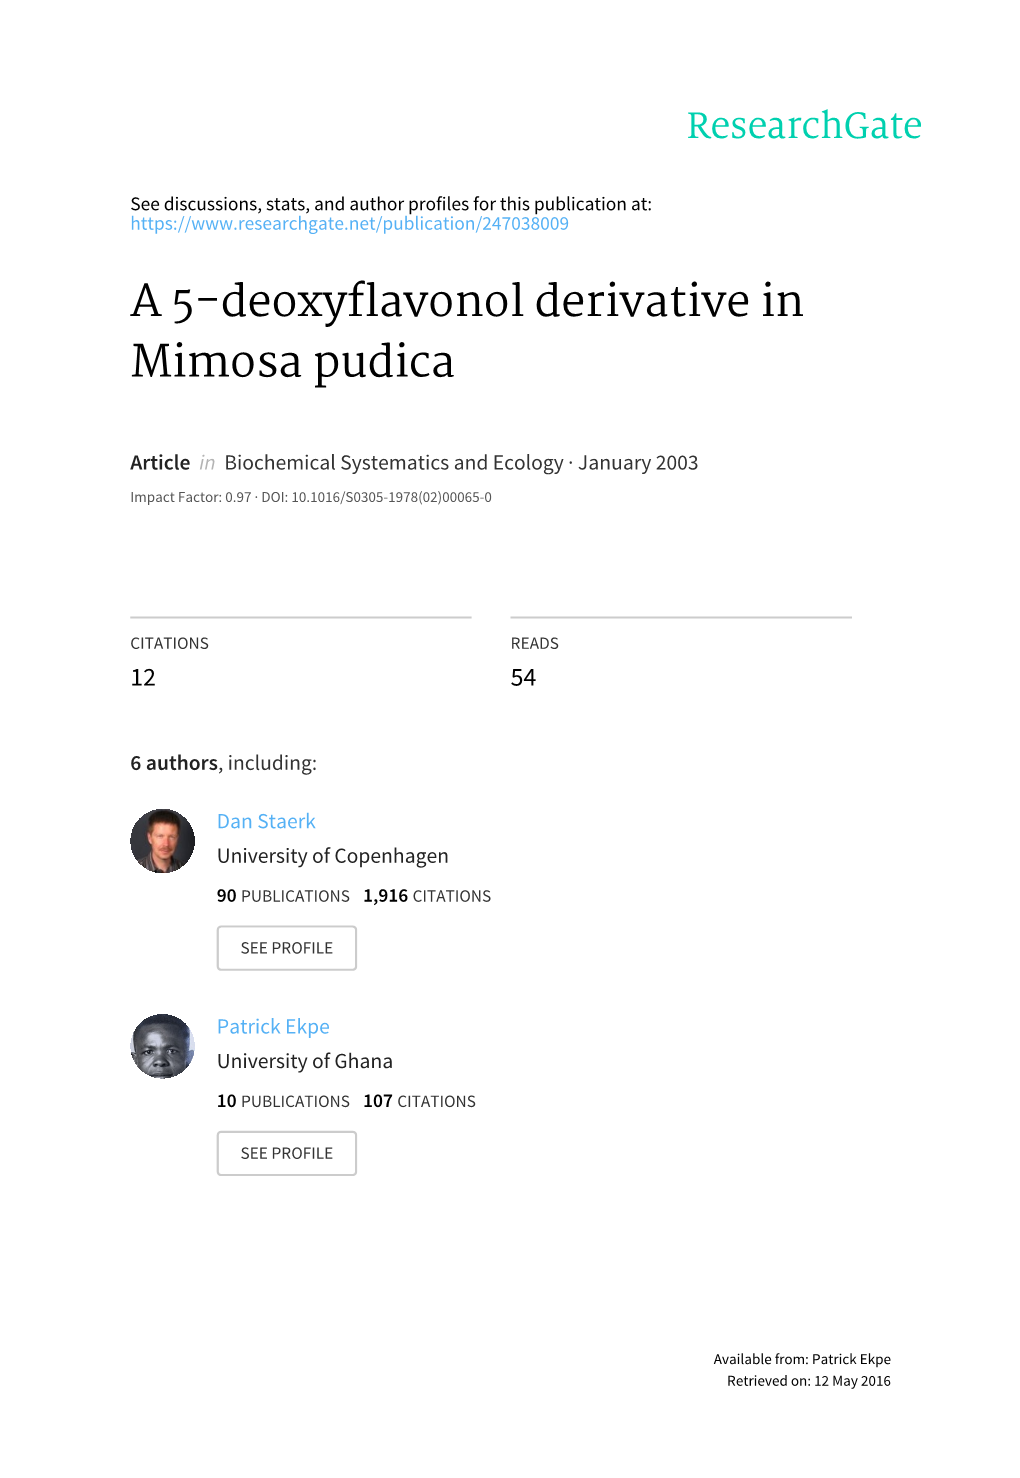 A 5-Deoxyflavonol Derivative in Mimosa Pudica